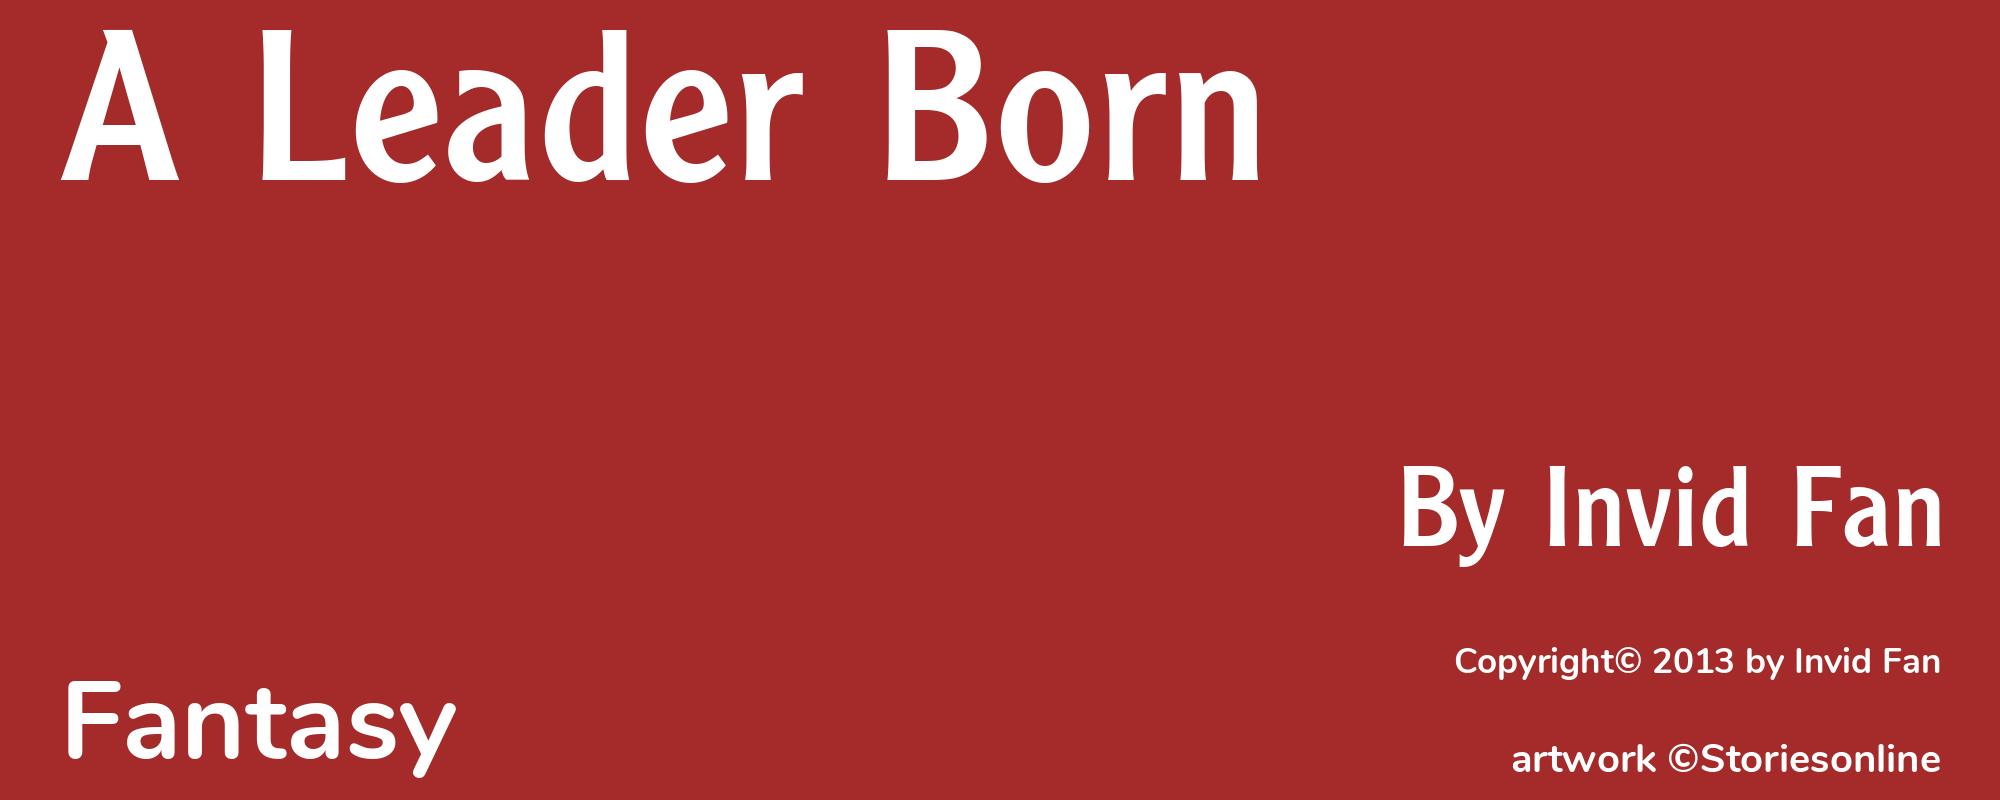 A Leader Born - Cover